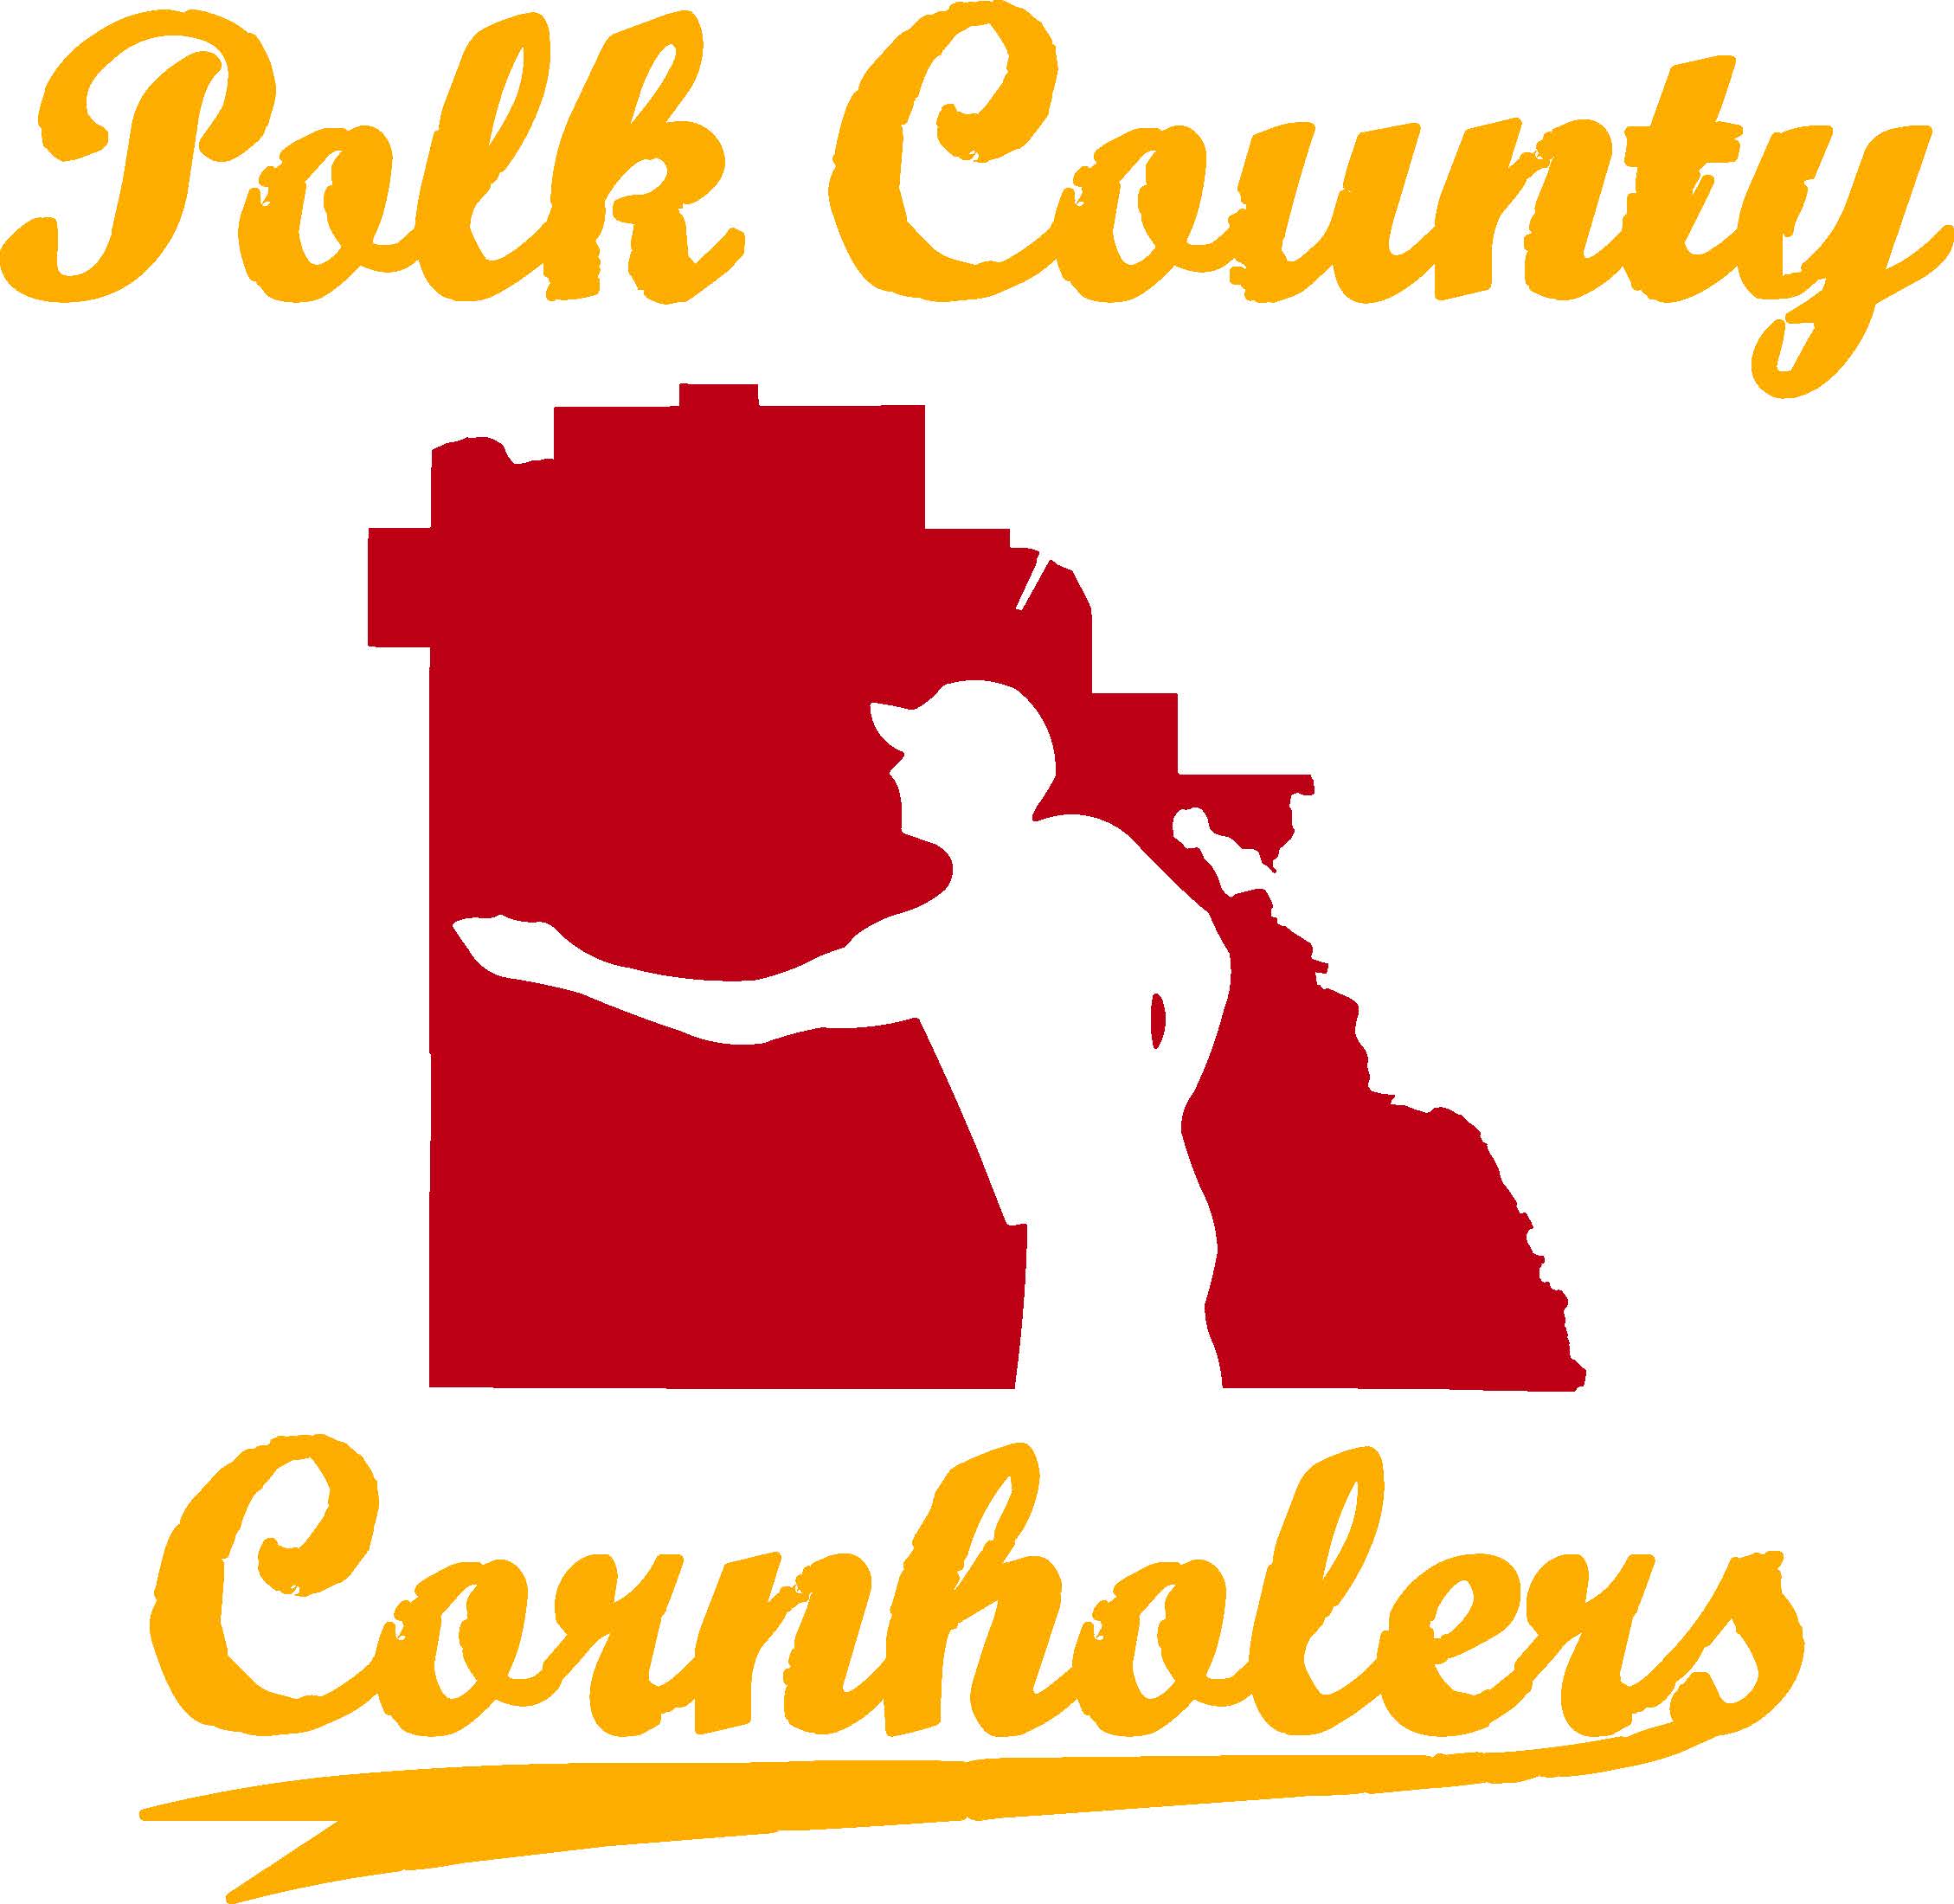 Roscoe's Chili Challenge welcomes the Polk County Cornholers